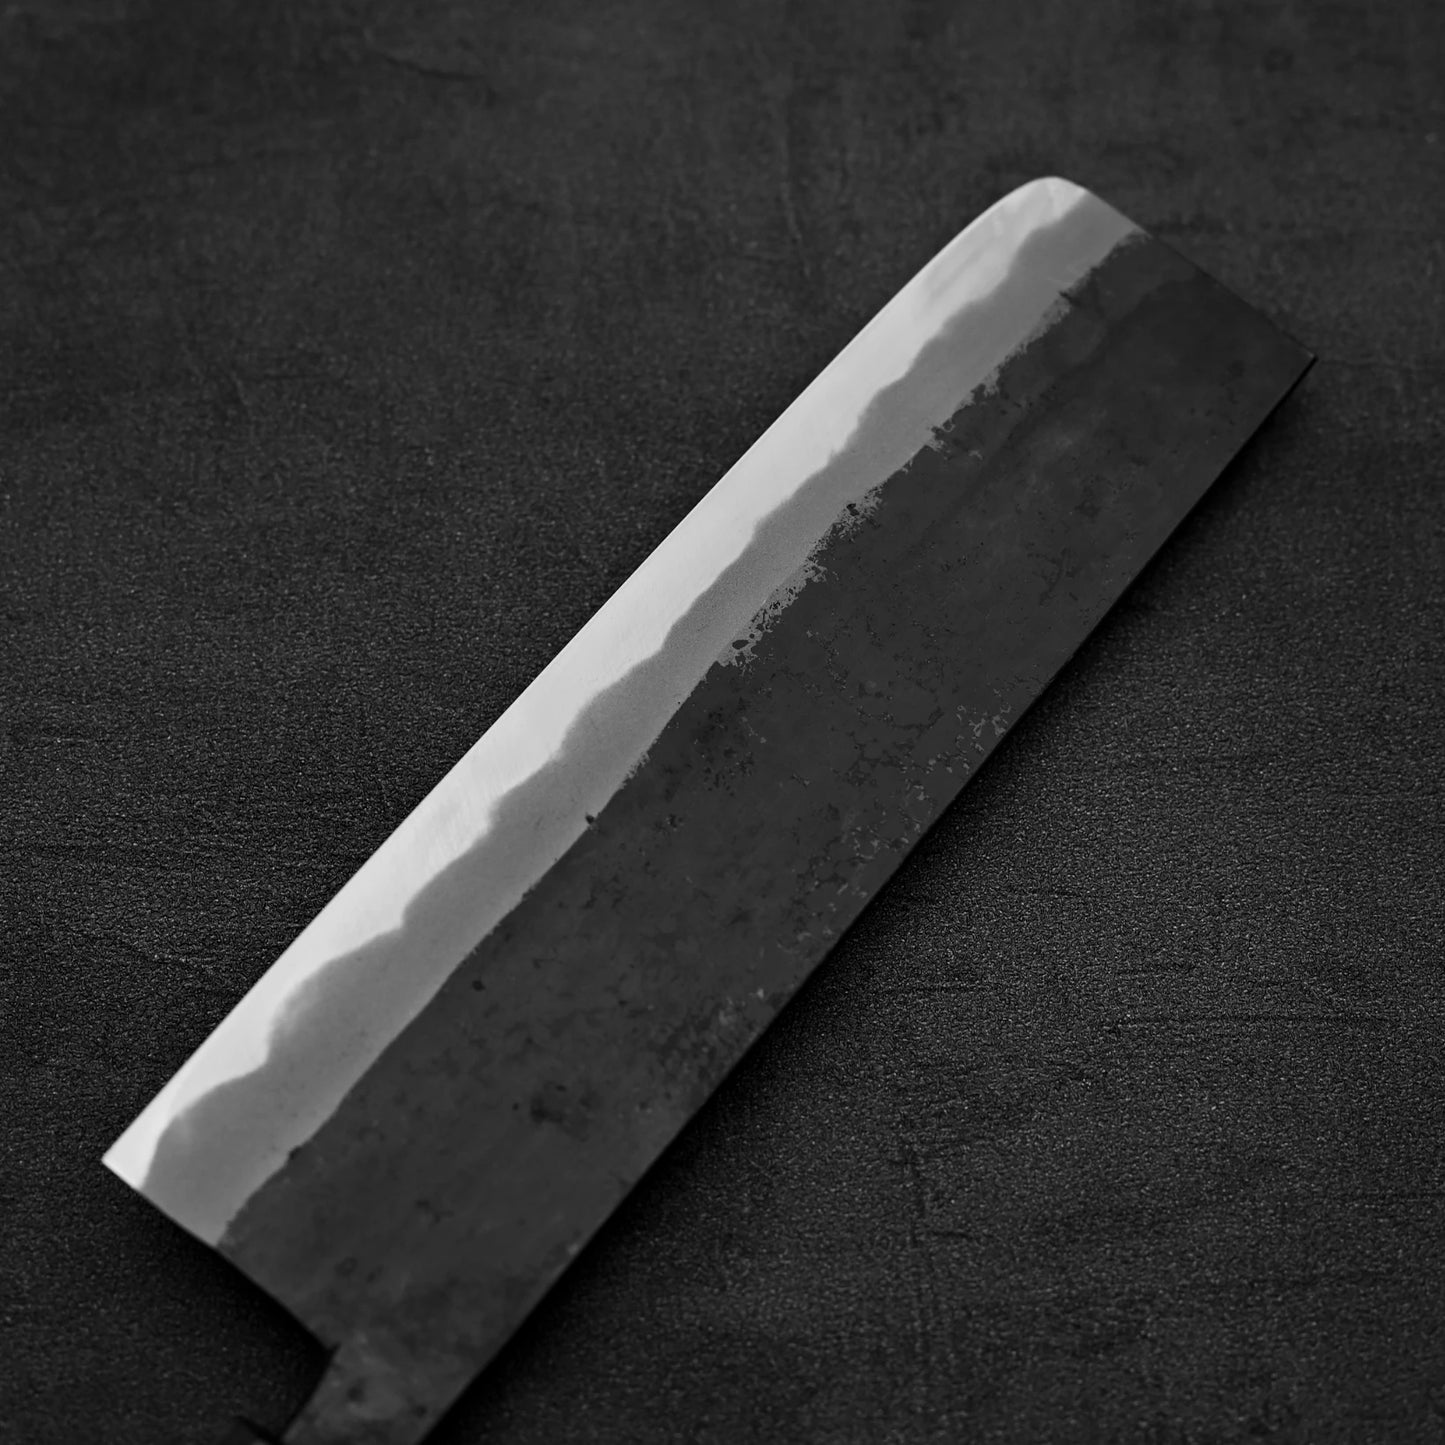 Back side of the blade of Hinokuni kurouchi shirogami#1 nakiri knife